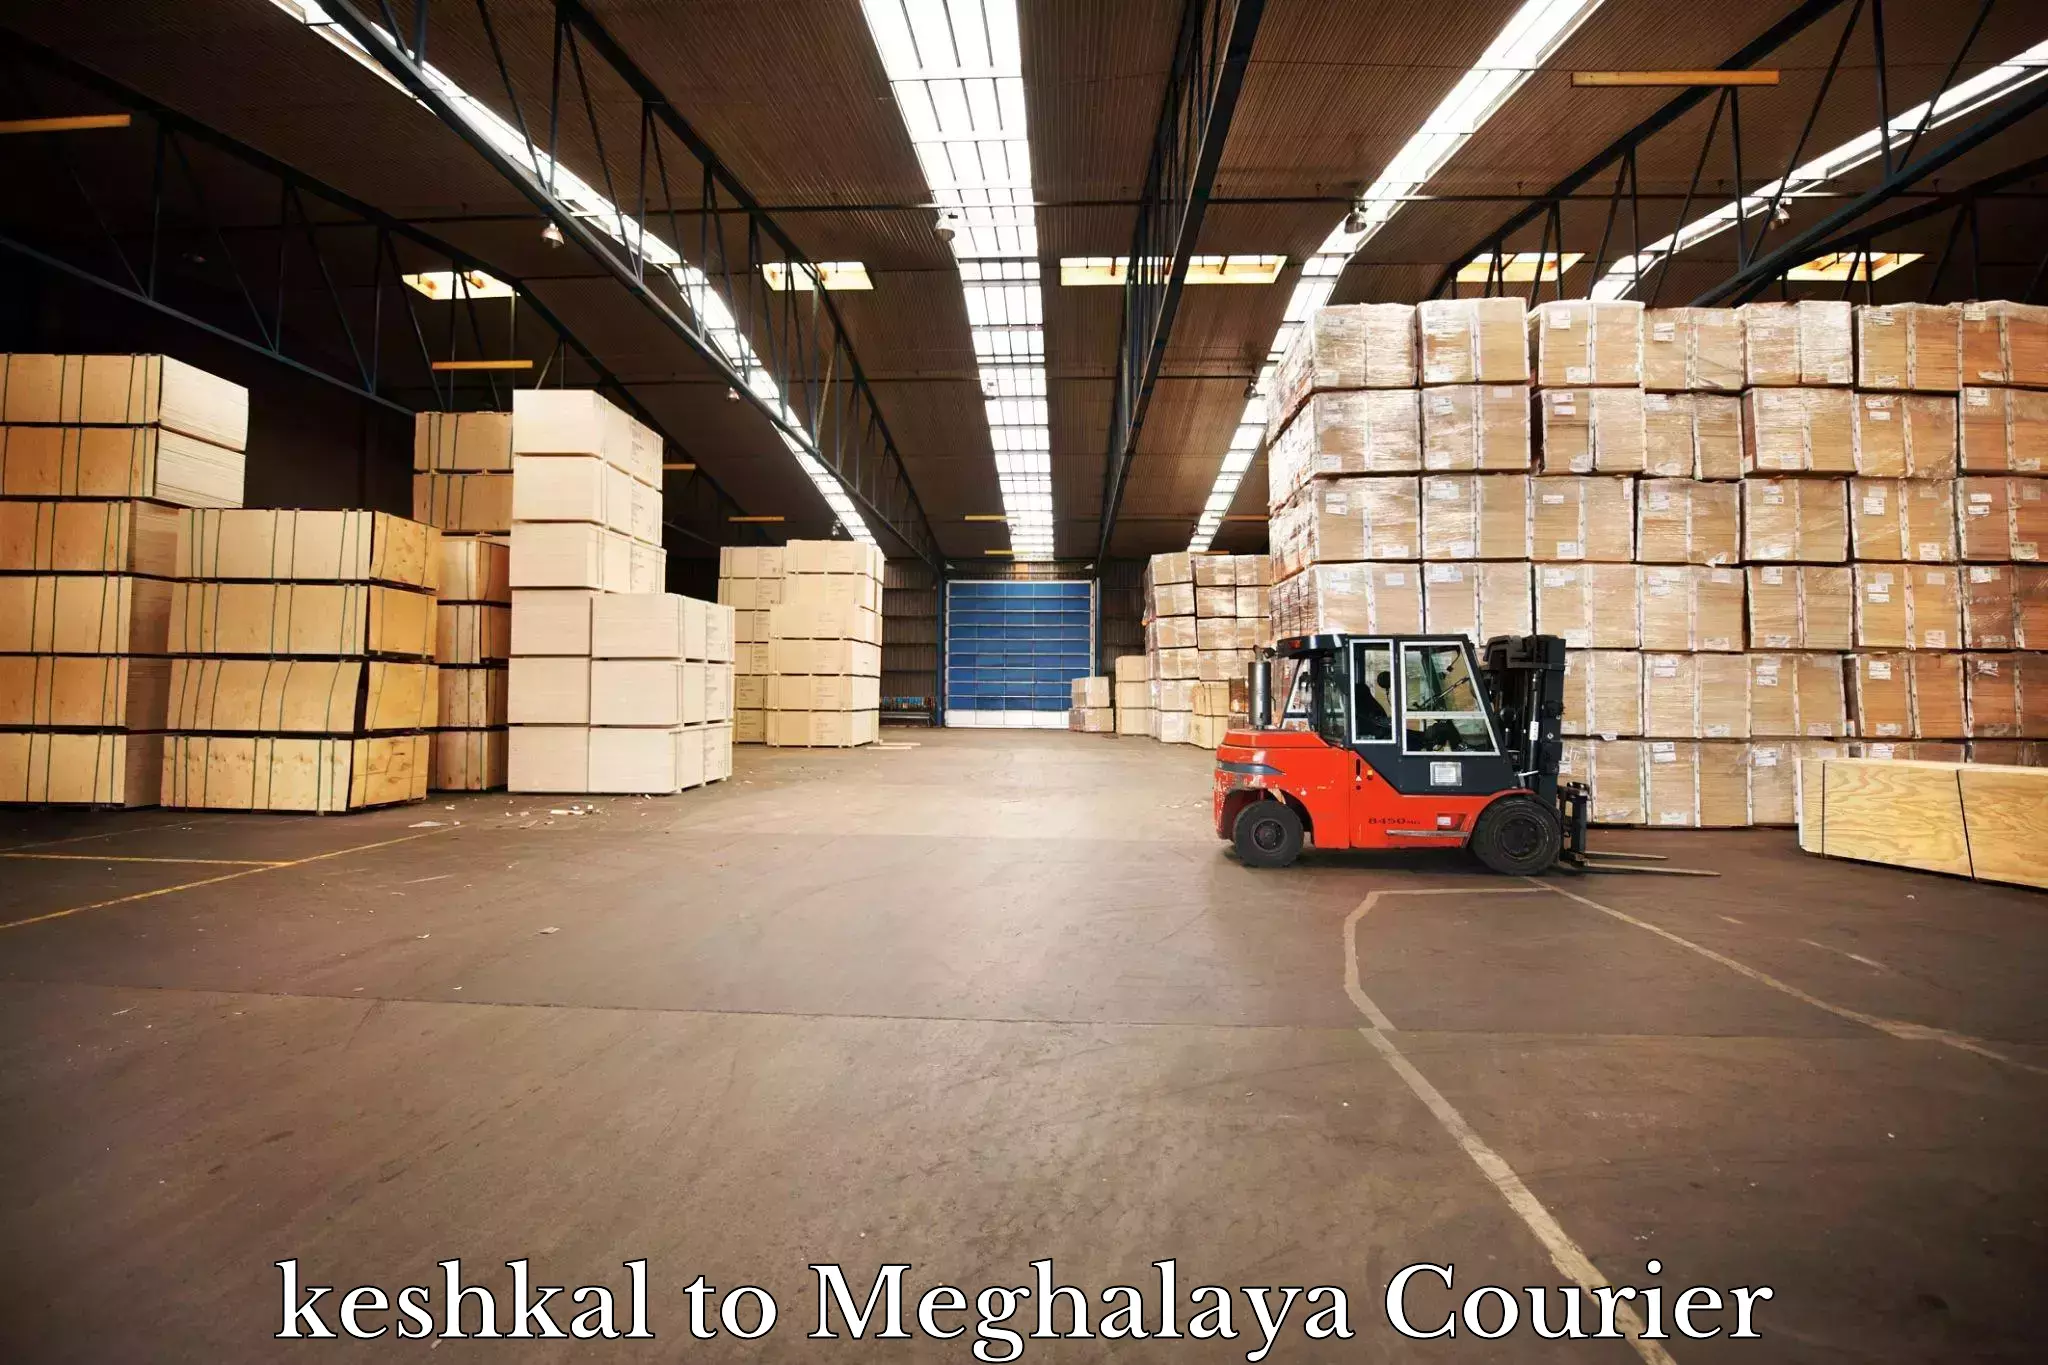 Customer-focused courier keshkal to Shillong